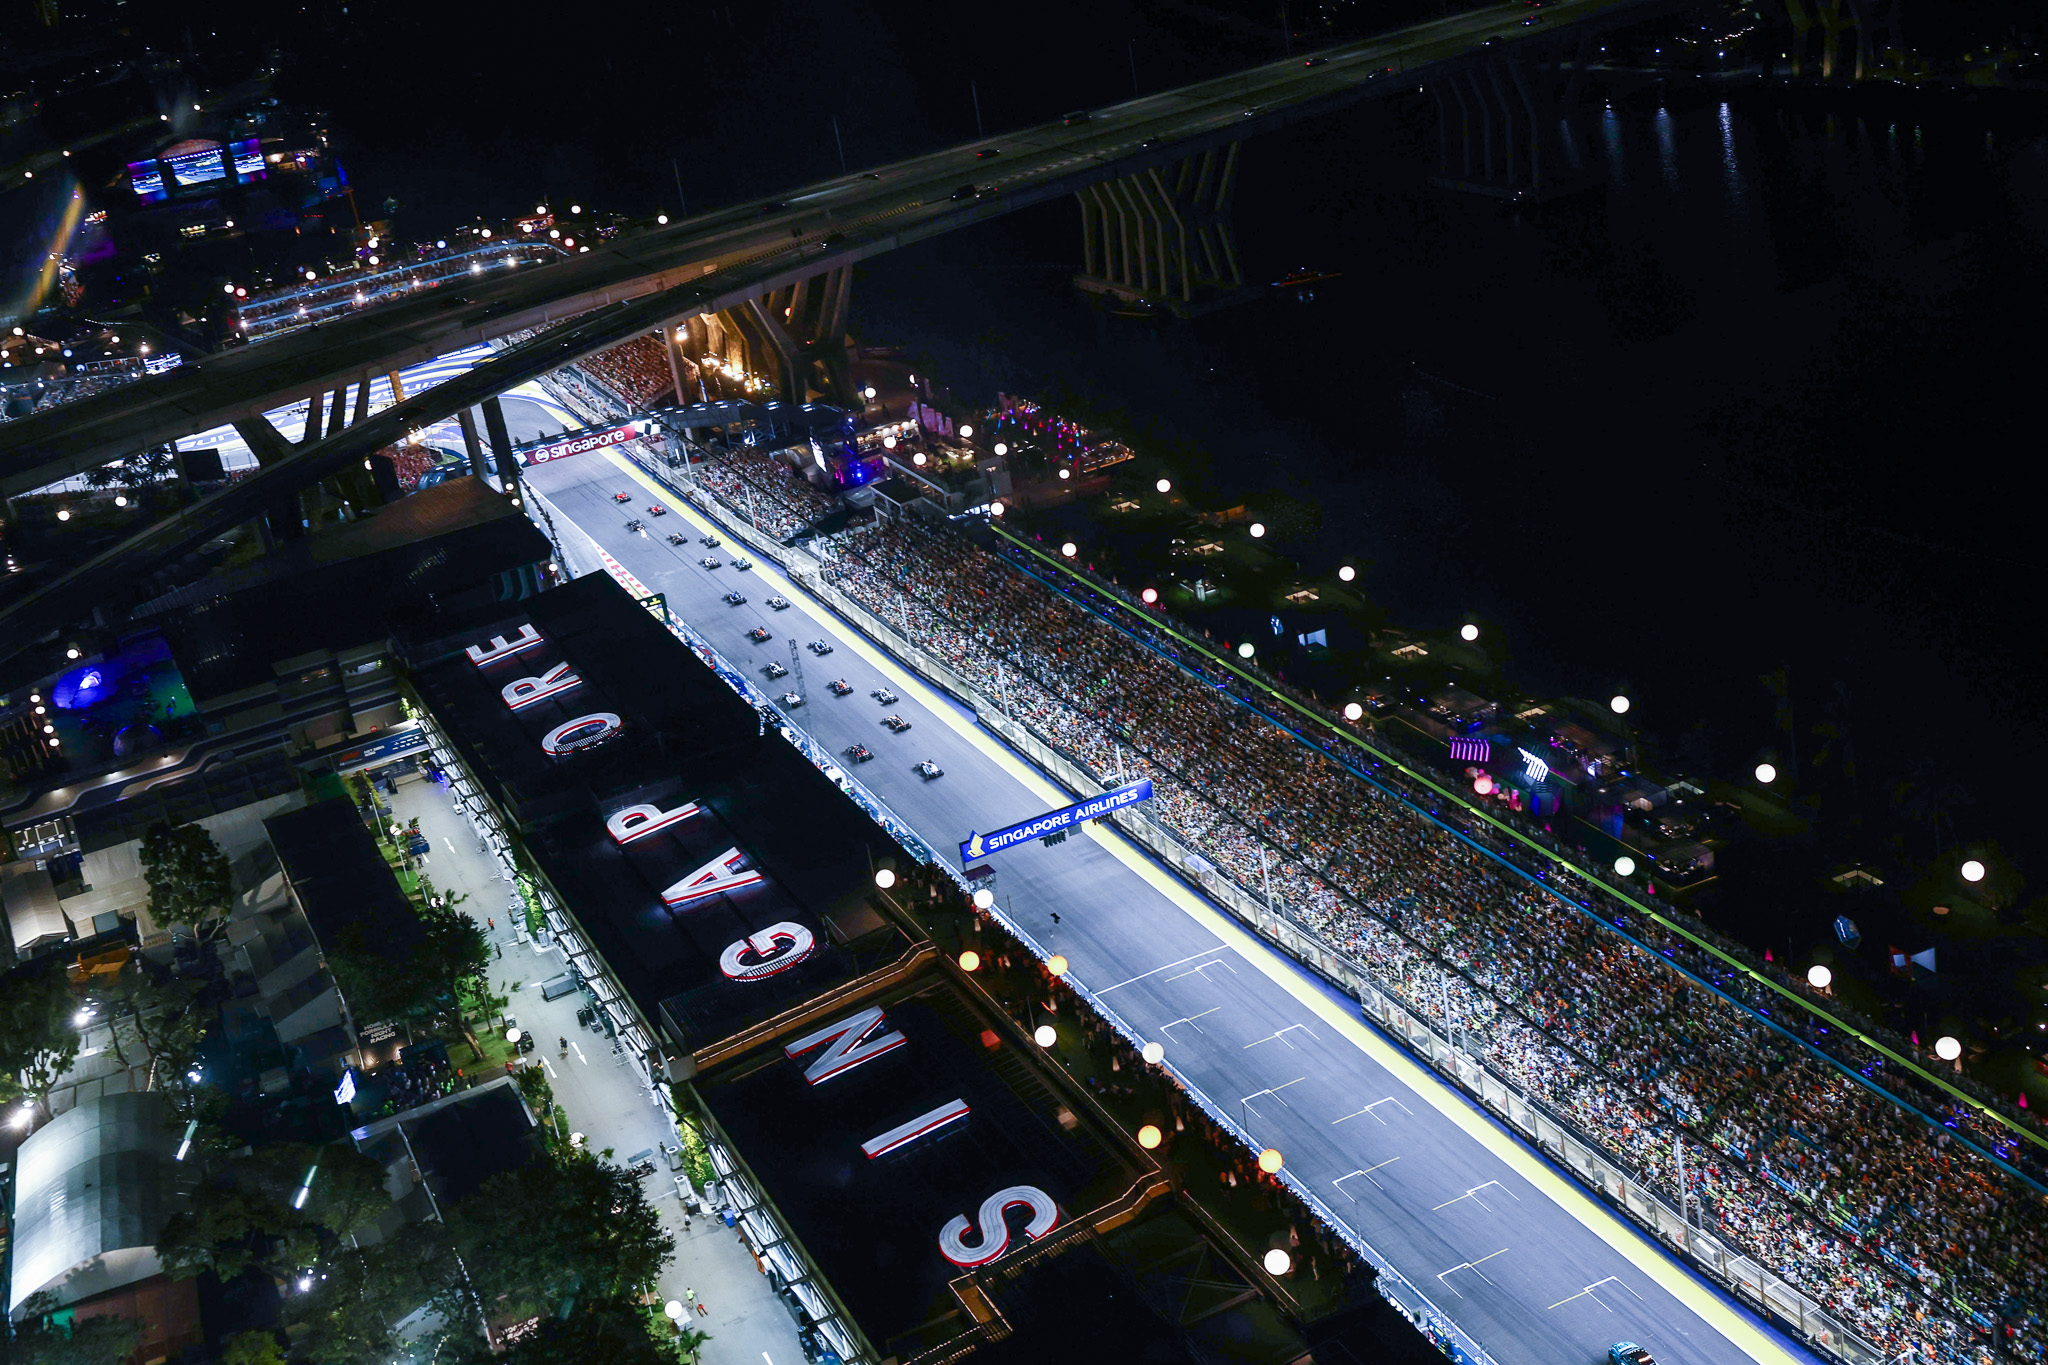 f1, formula 1, singapore gp, singapore night race, f1 singapore, singapore f1, singapore grand prix, sggp, formula 1 night race, ferrari, carlos sainz, f1, formula 1, formula one, singapore gp, singapore f1, singapore f1 night race, ferrari, carlos sainz is the 2023 singapore grand prix winner